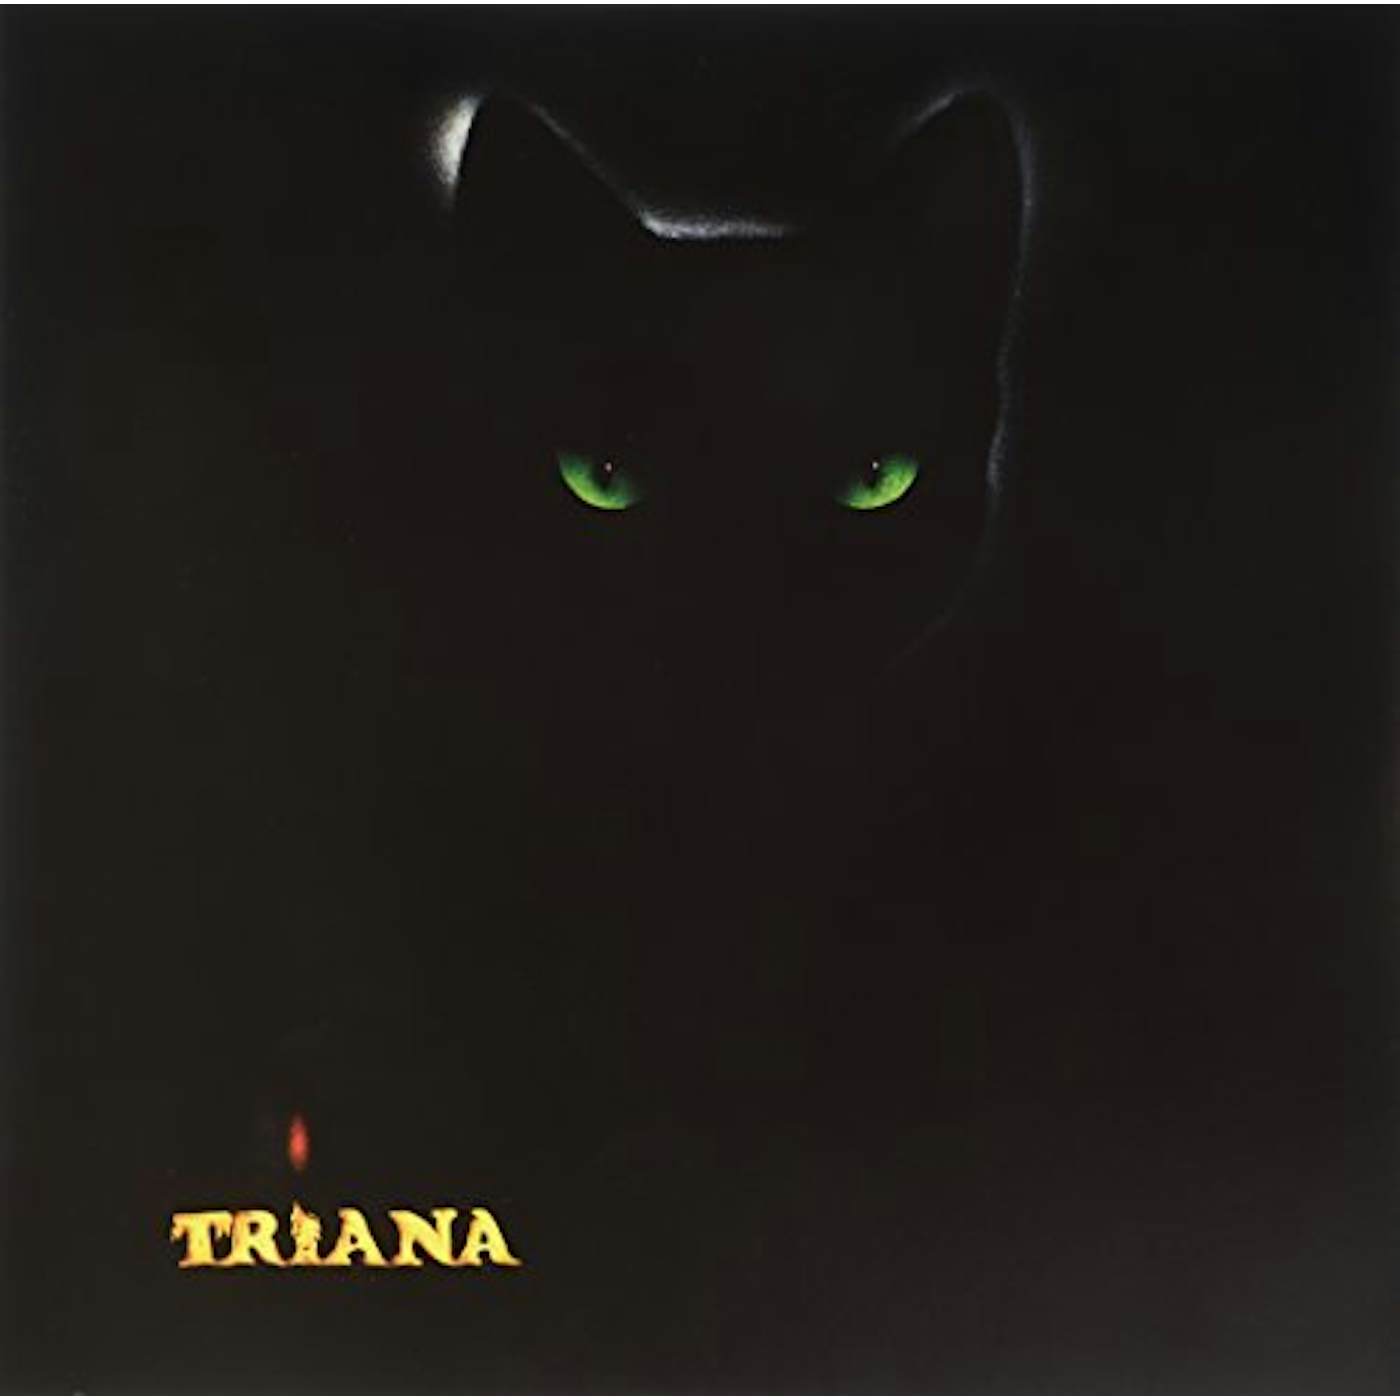 Triana ENCUENTRO Vinyl Record